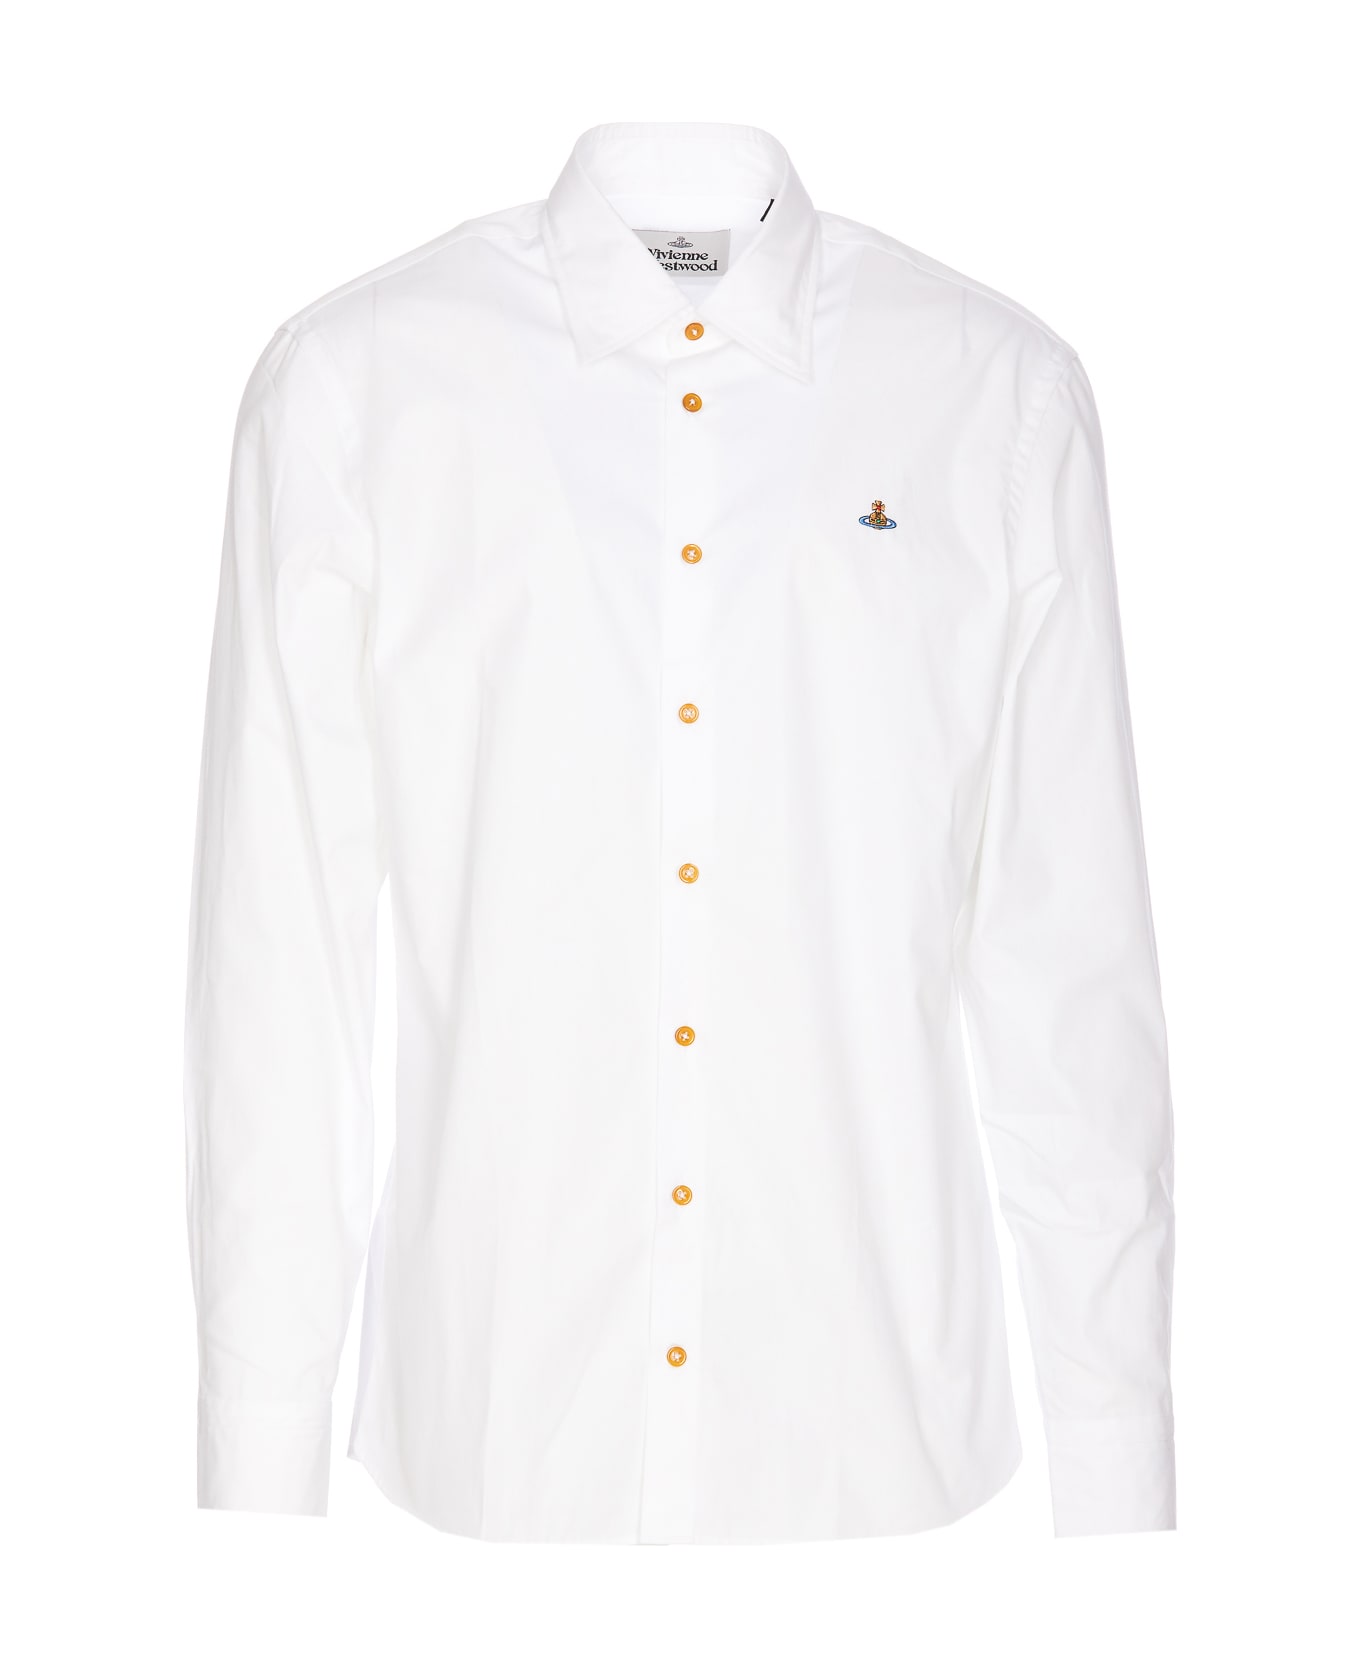 Vivienne Westwood Ghost Shirt - White